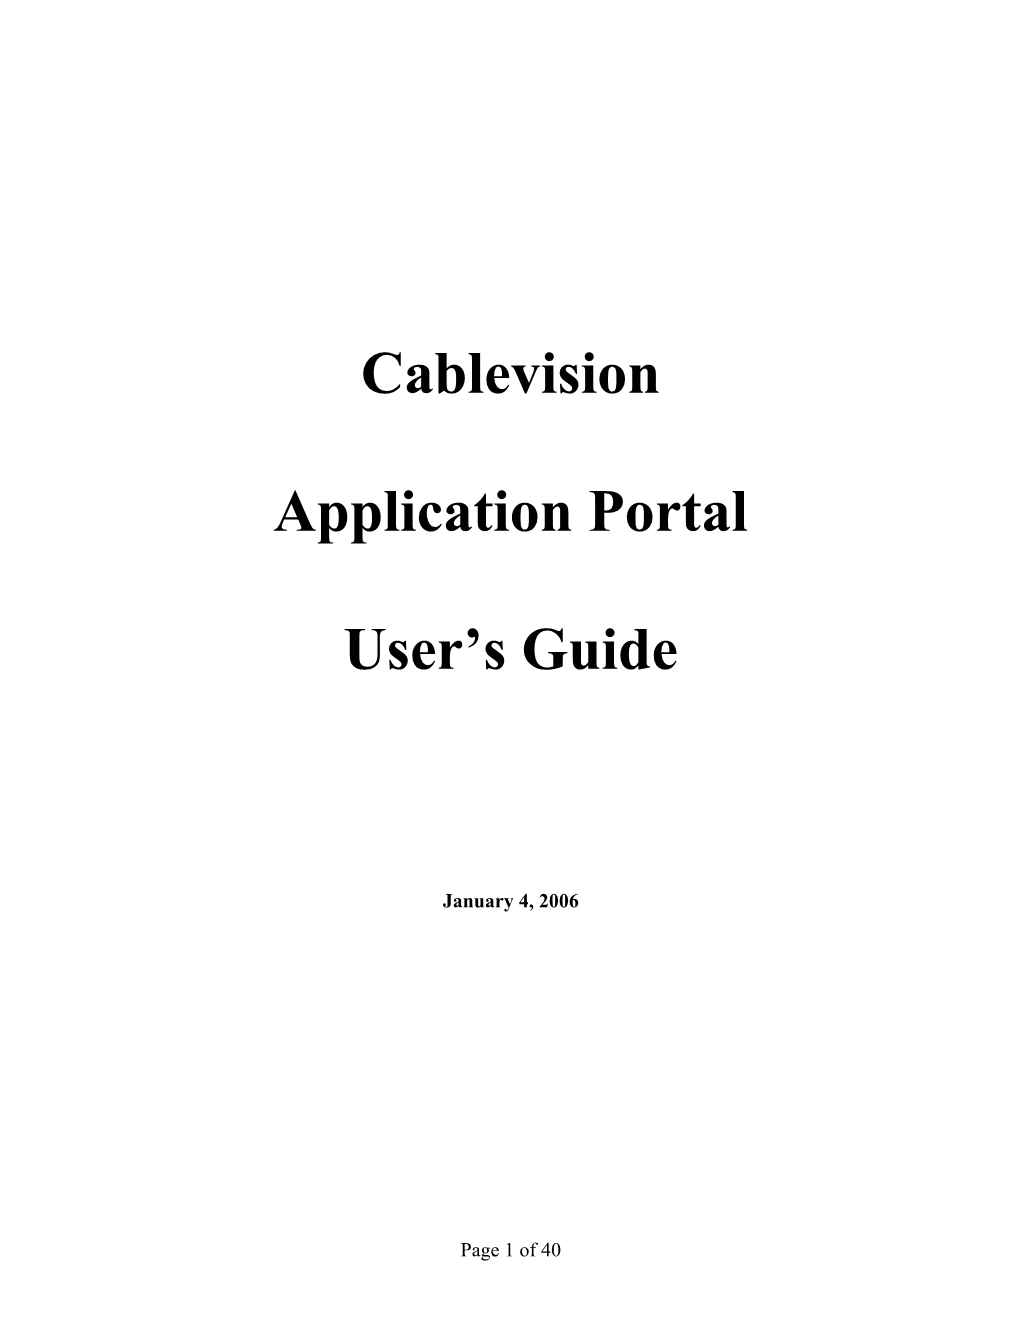 Cablevision Application Portal